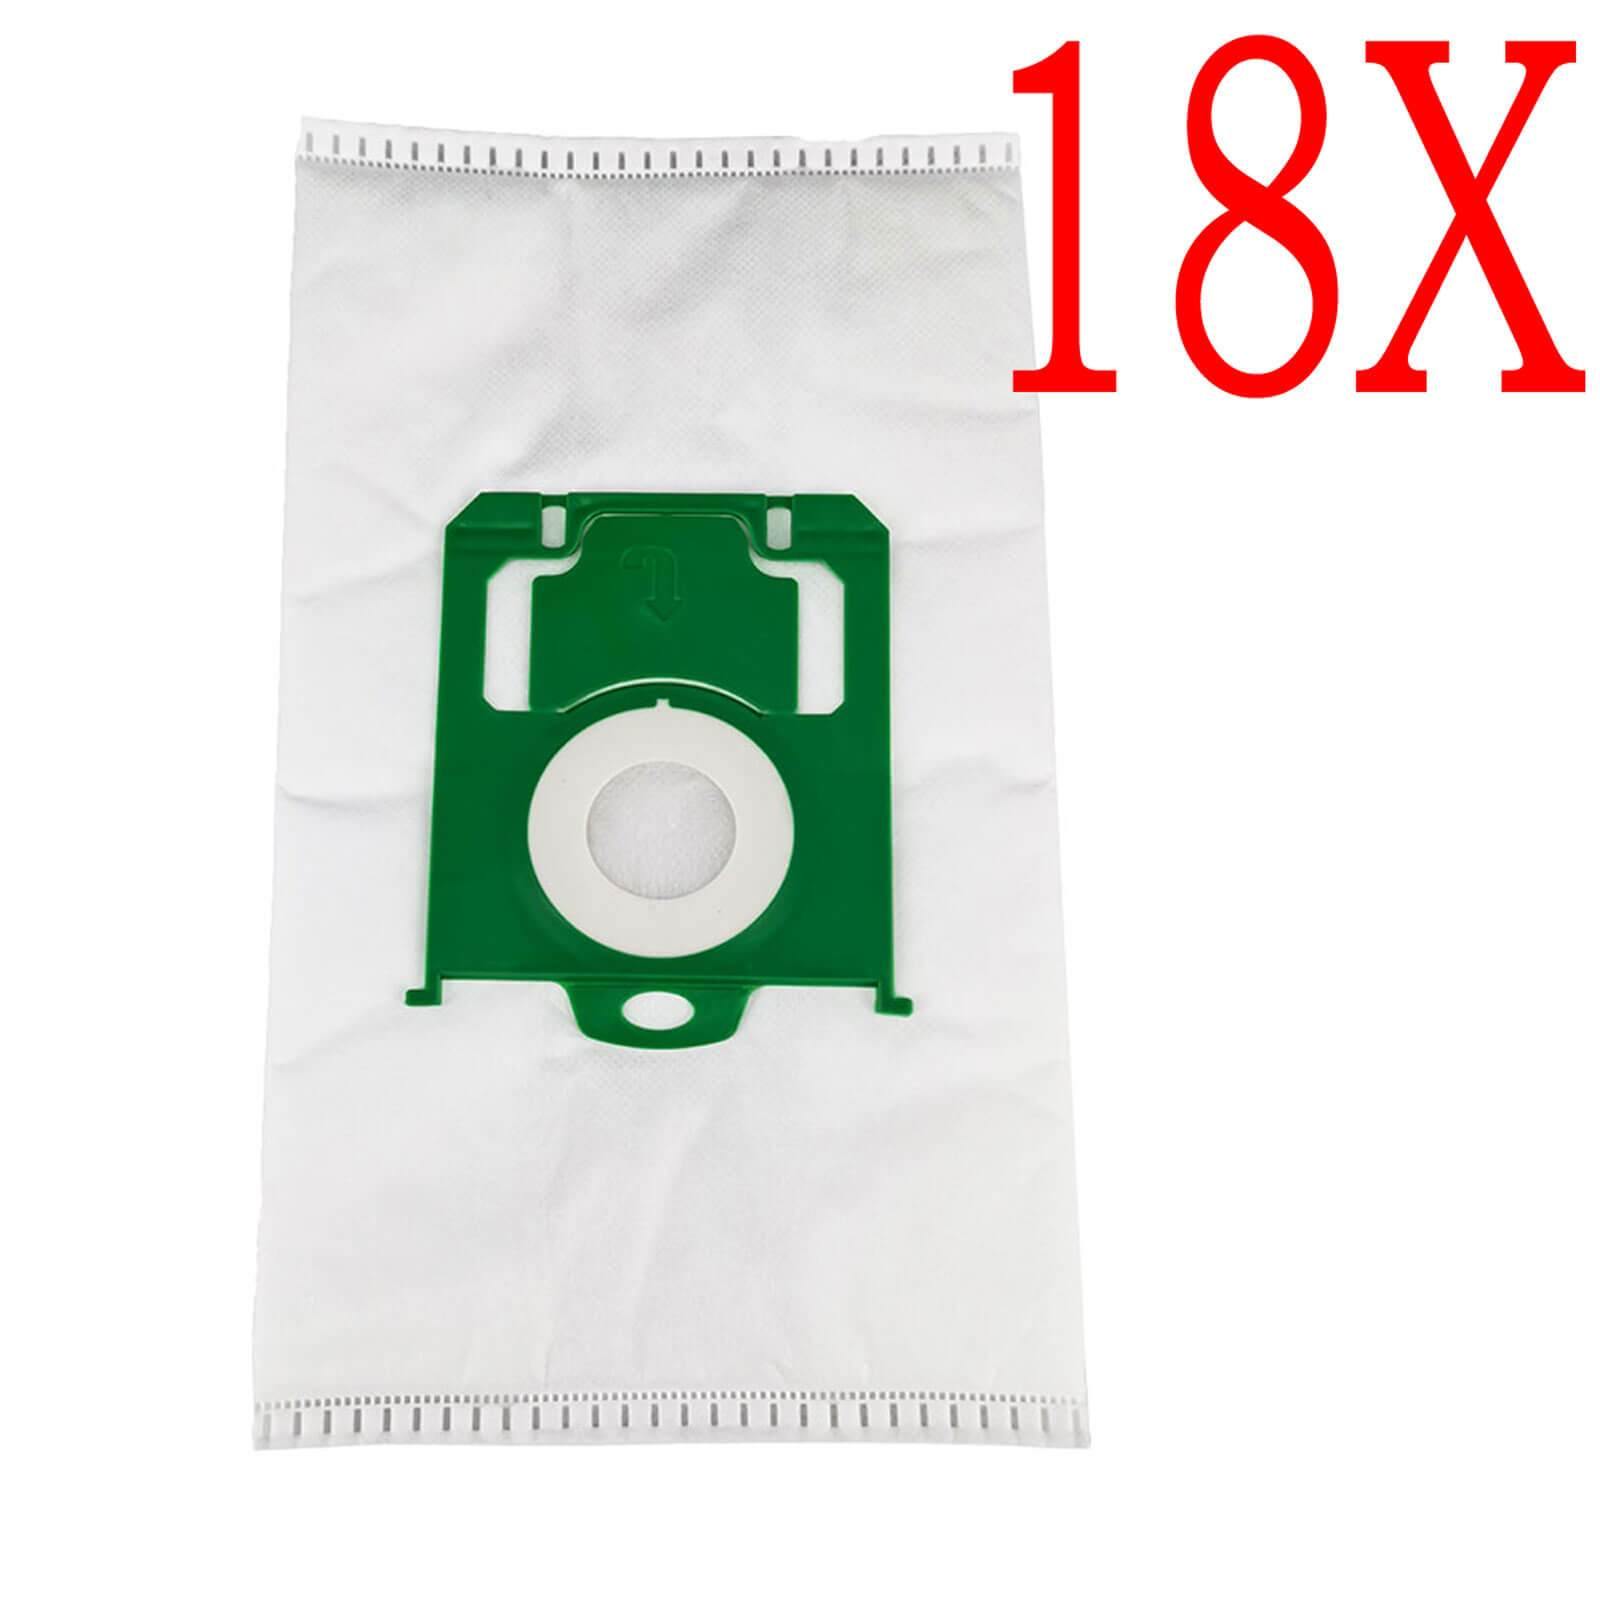 6 Vacuum Dust bags compatible for Qualtex SDB190 SDB191 Electrolux E54AB E54N Sparesbarn